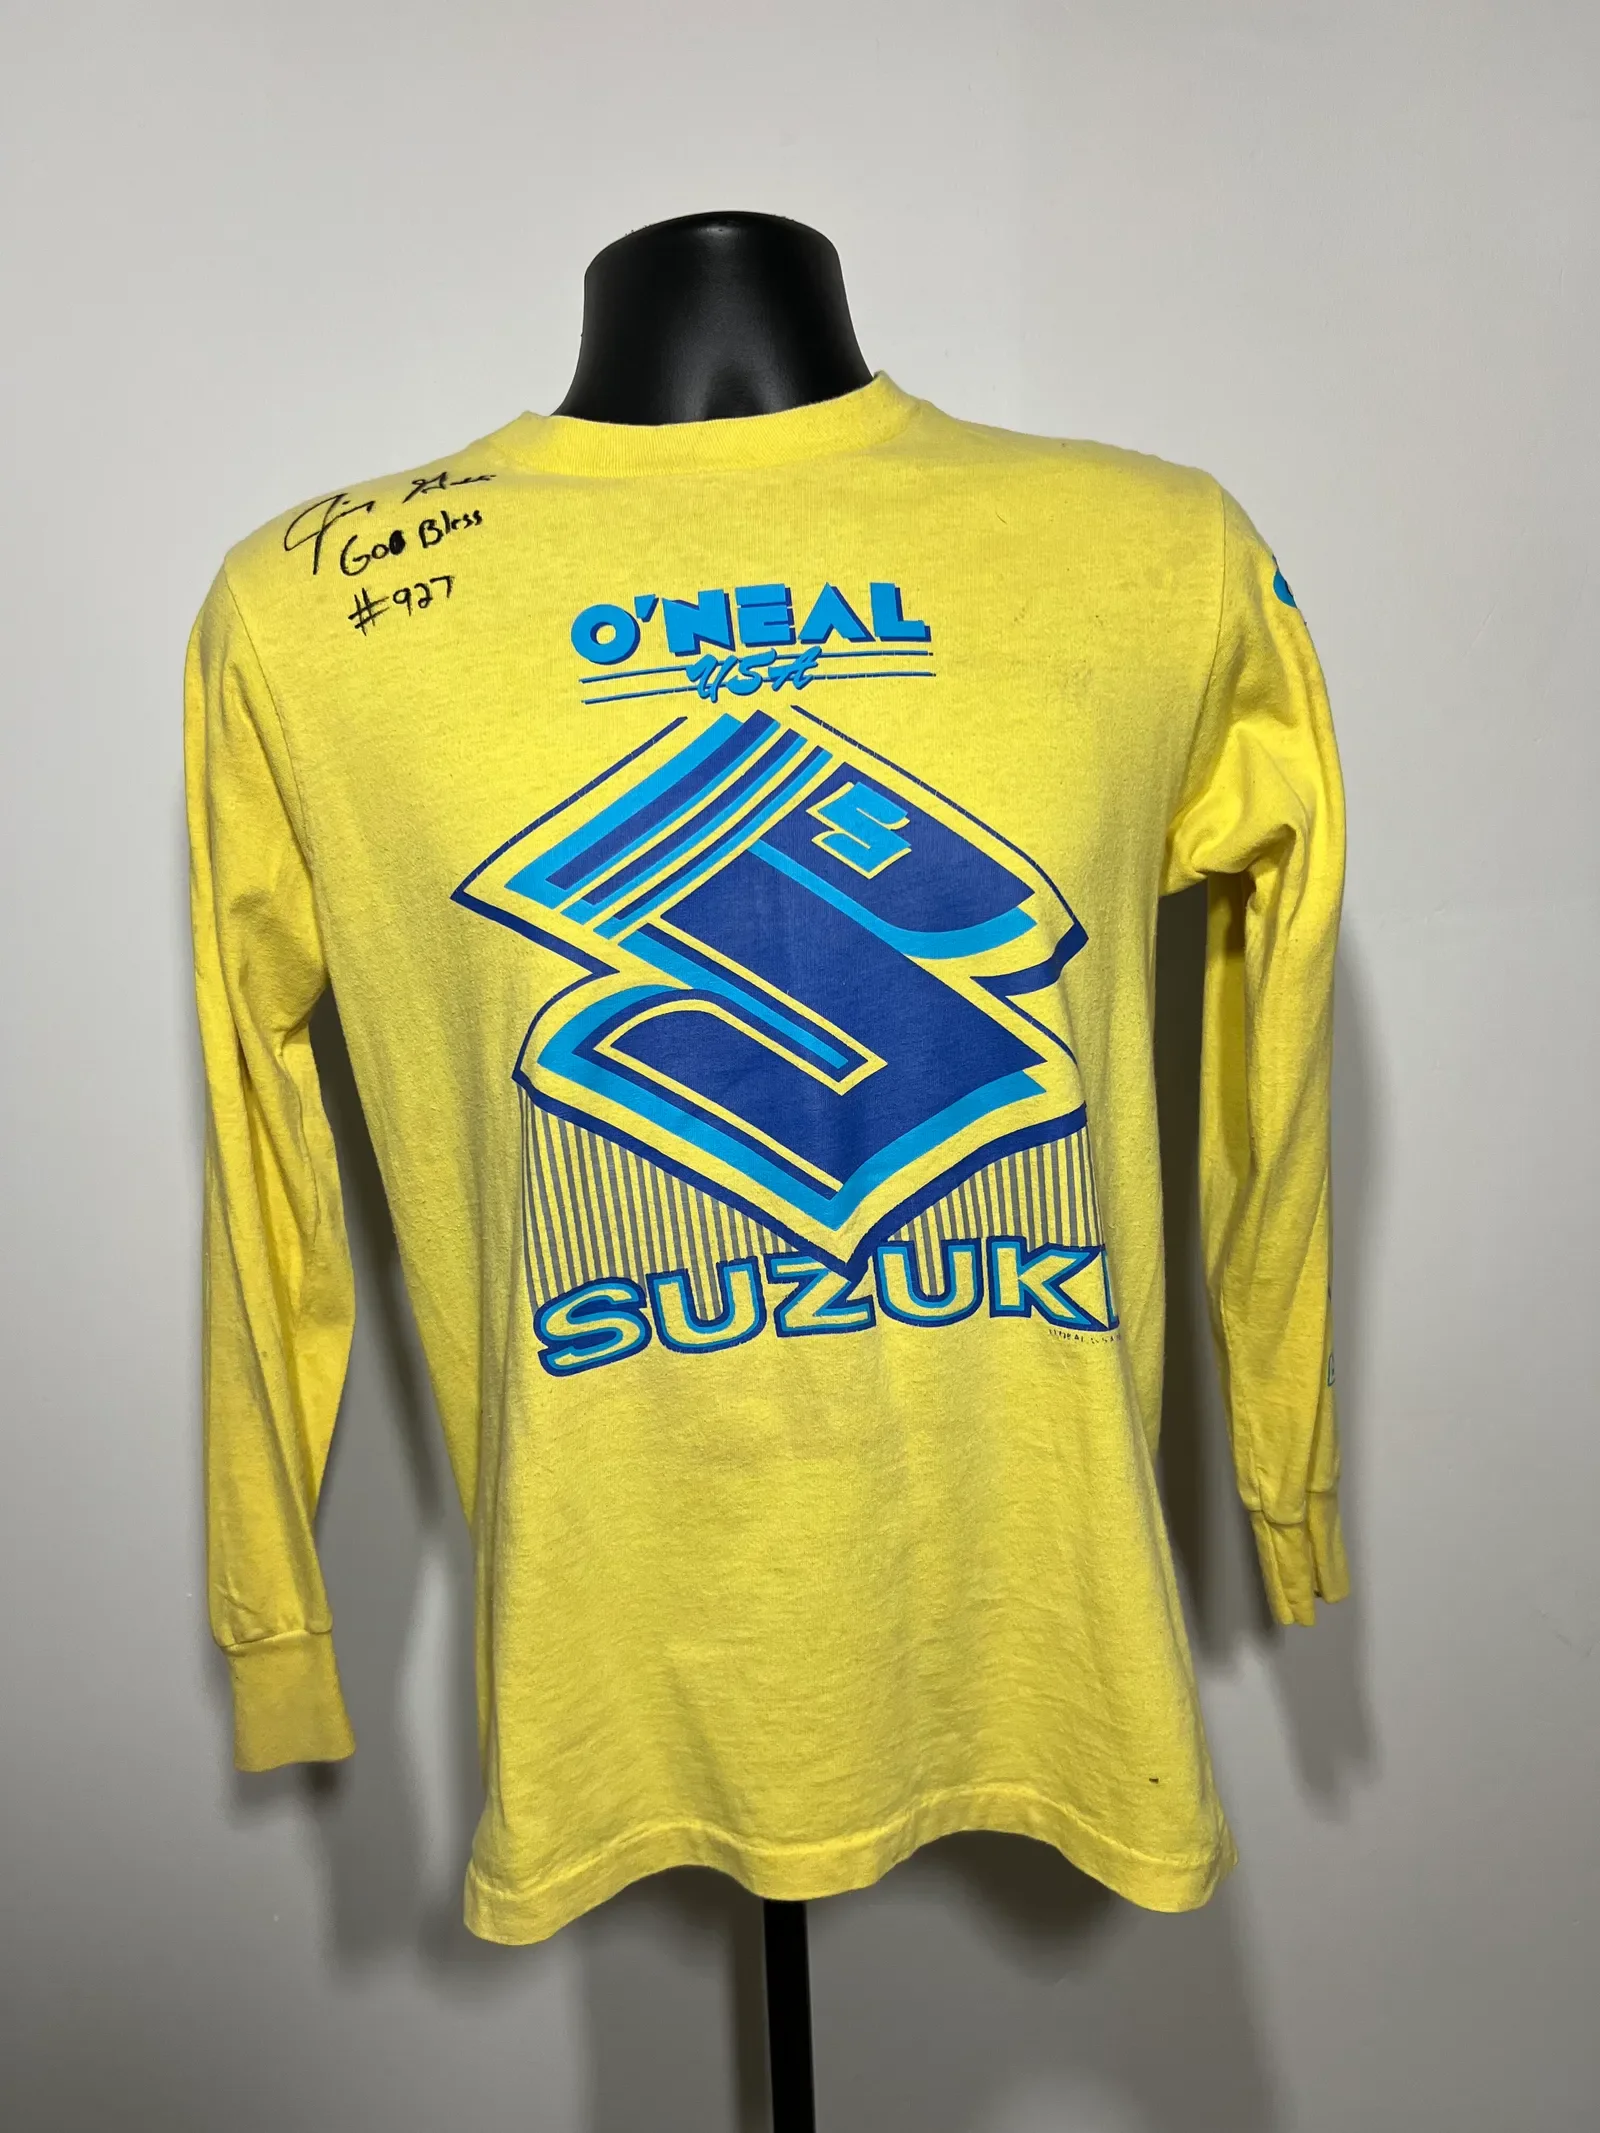 Jimmy Gaddis 1988 Race Worn Autographed O'Neal Suzuki Jersey